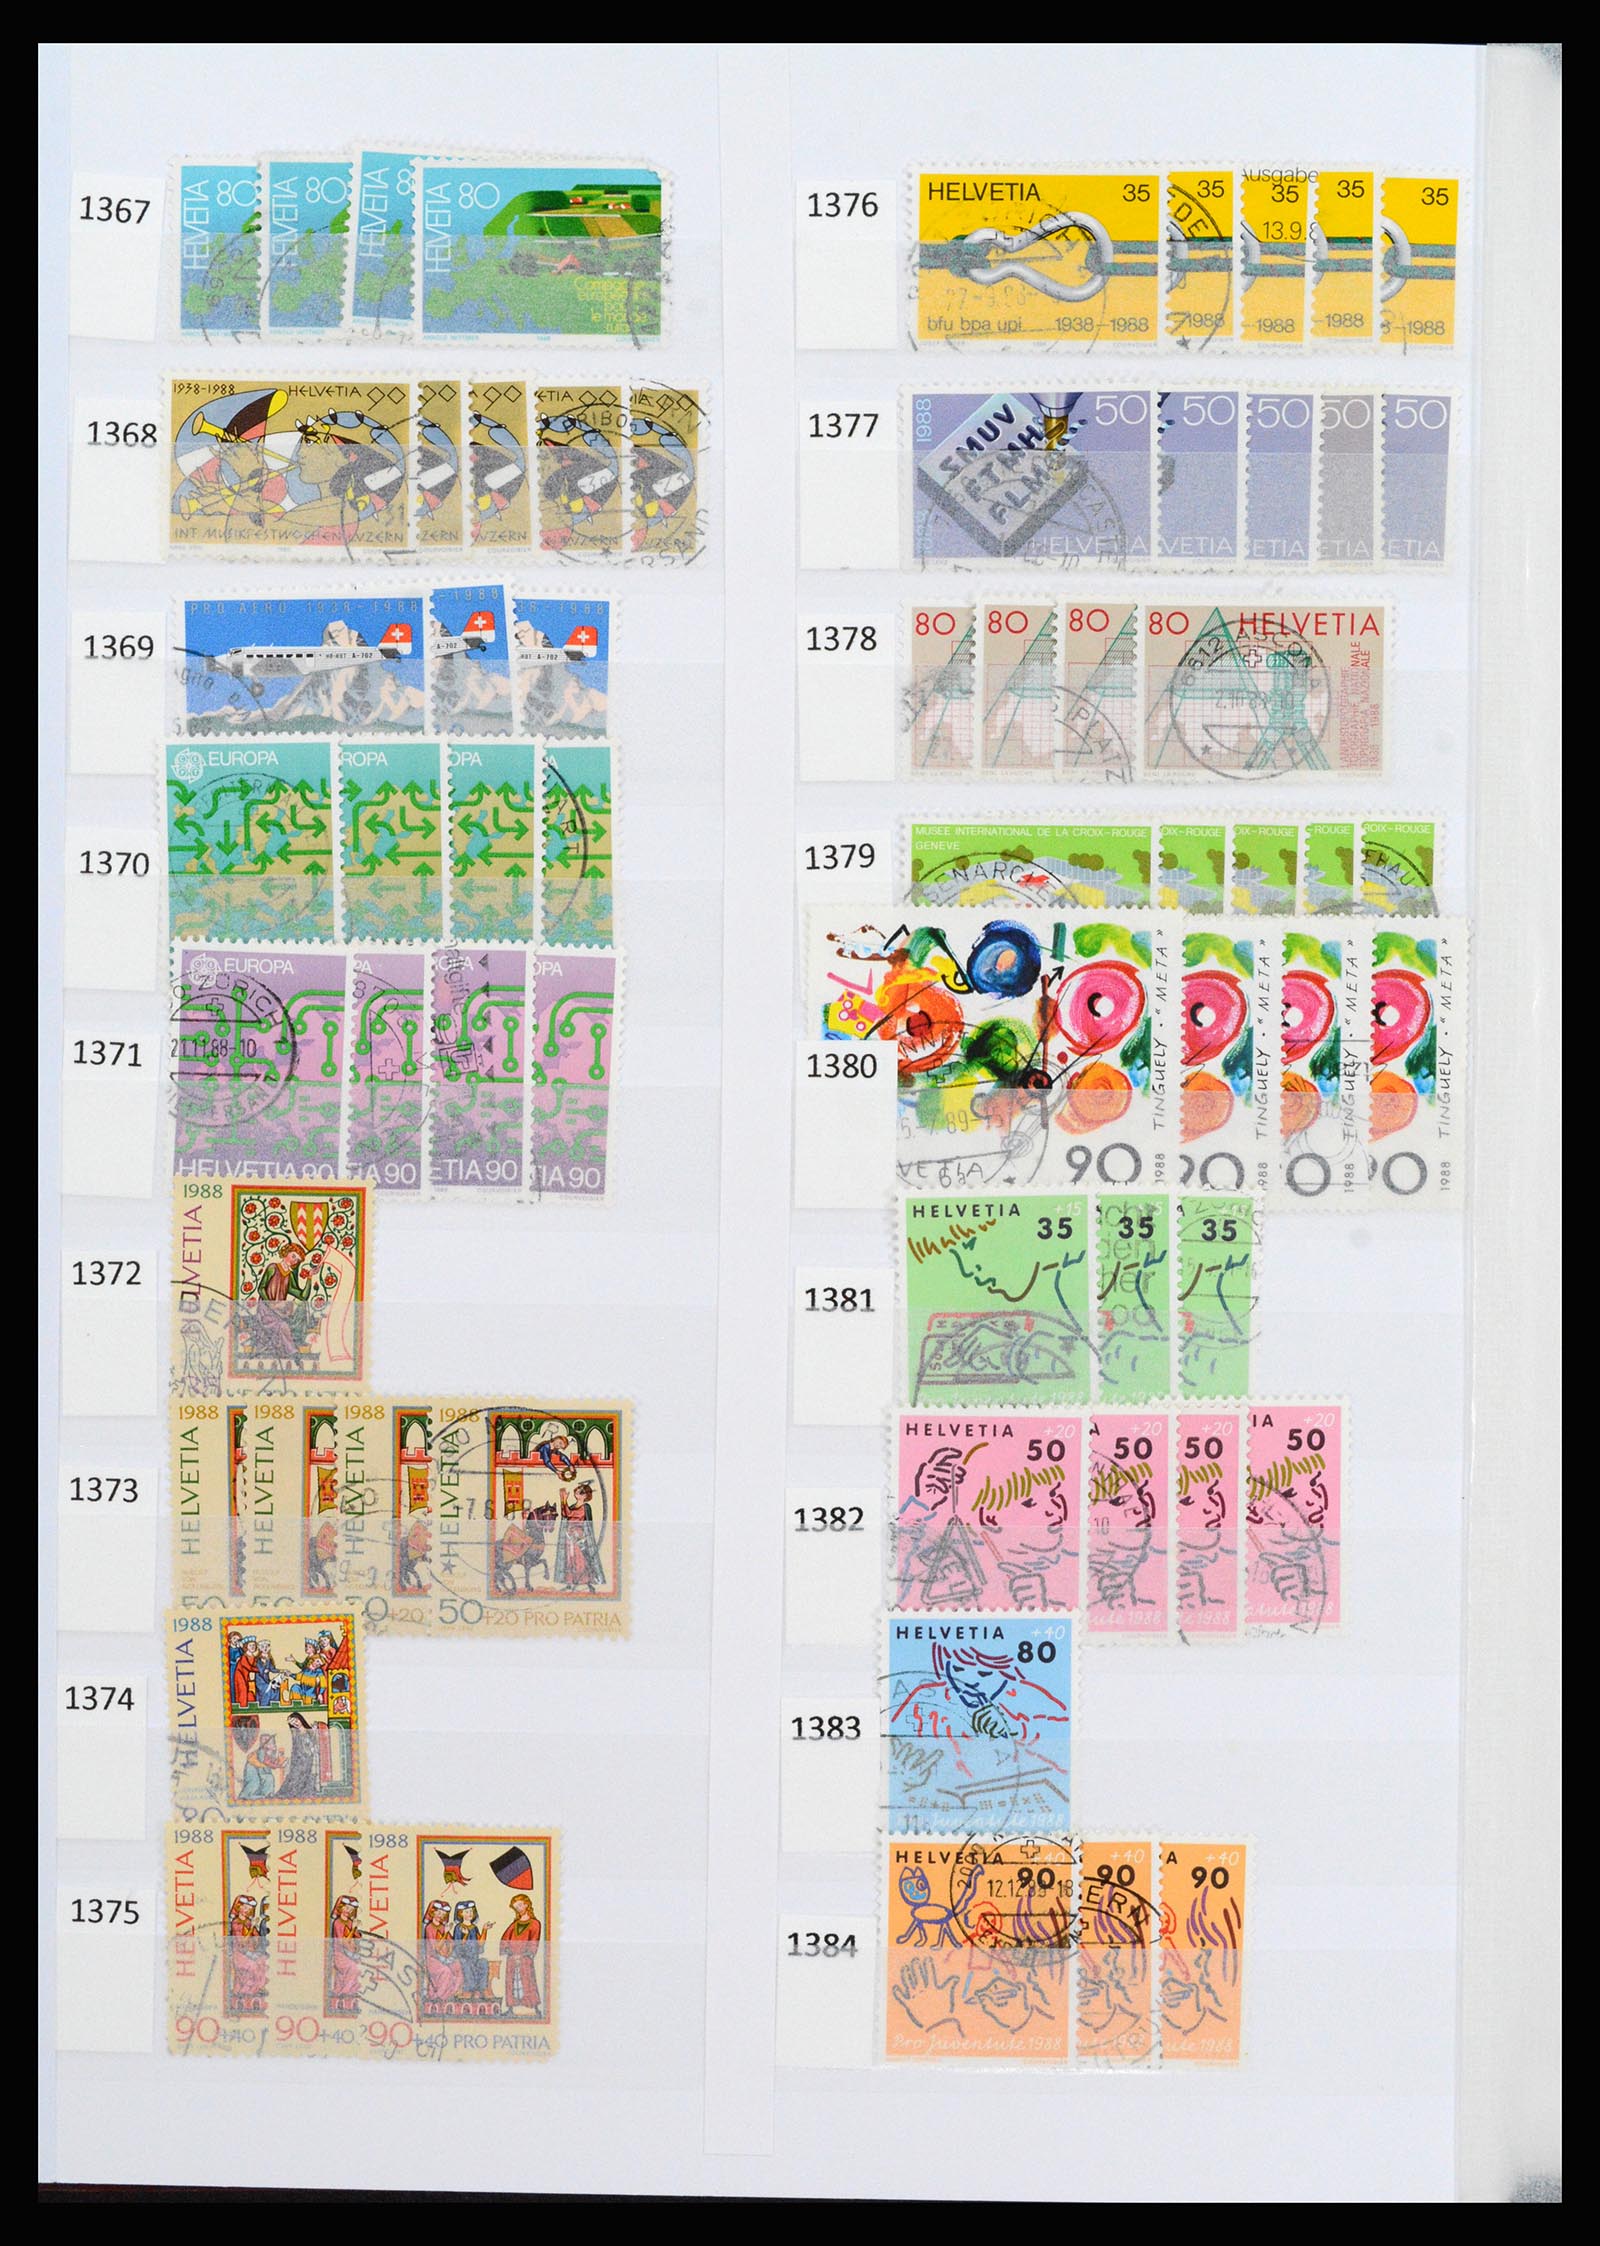 37252 077 - Stamp collection 37252 Switzerland 1900-2011.